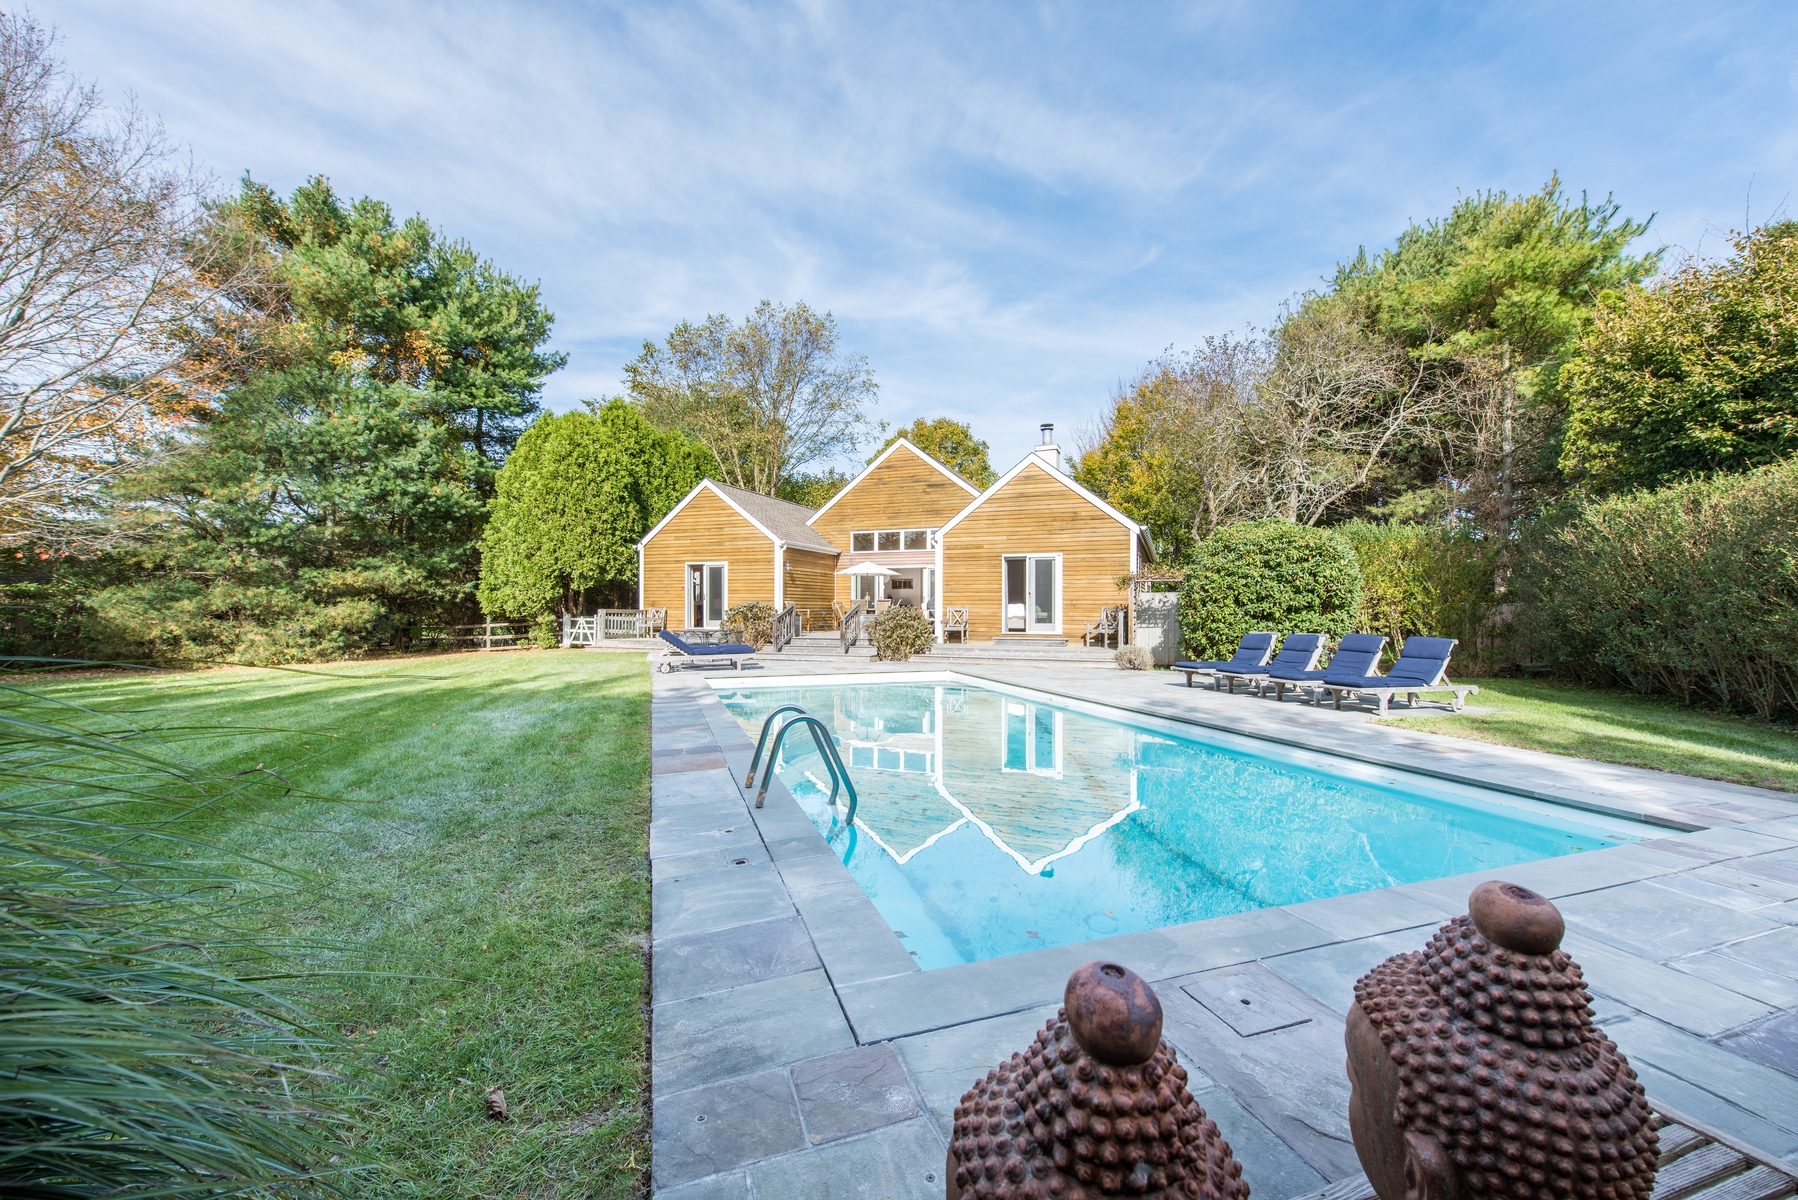 Rental Property at Bridgehampton, Bridgehampton, Hamptons, NY - Bedrooms: 3 
Bathrooms: 2  - $39,500 MO.